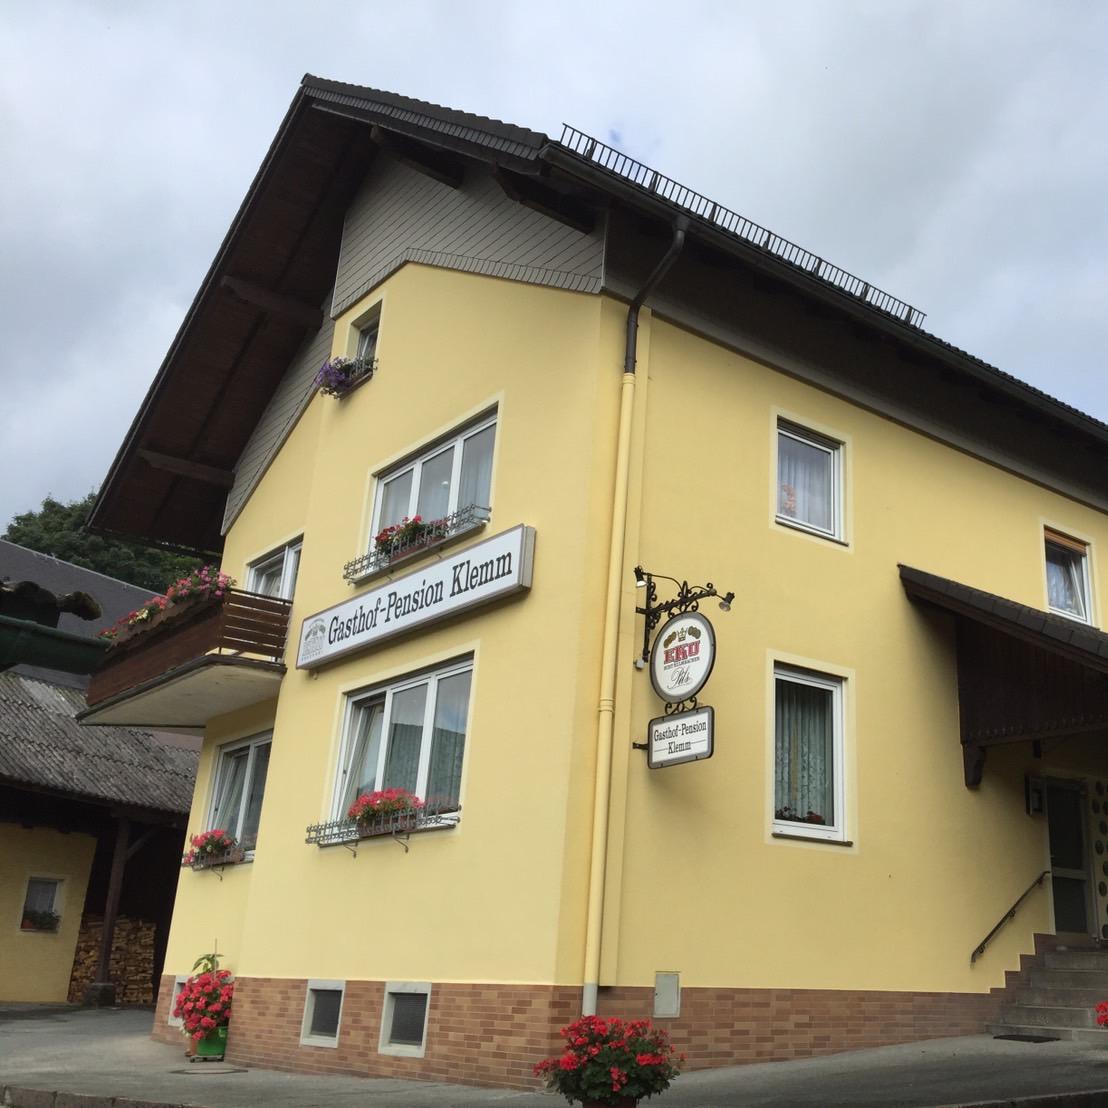 Restaurant "Klemm Gasthof Pension" in Tettau